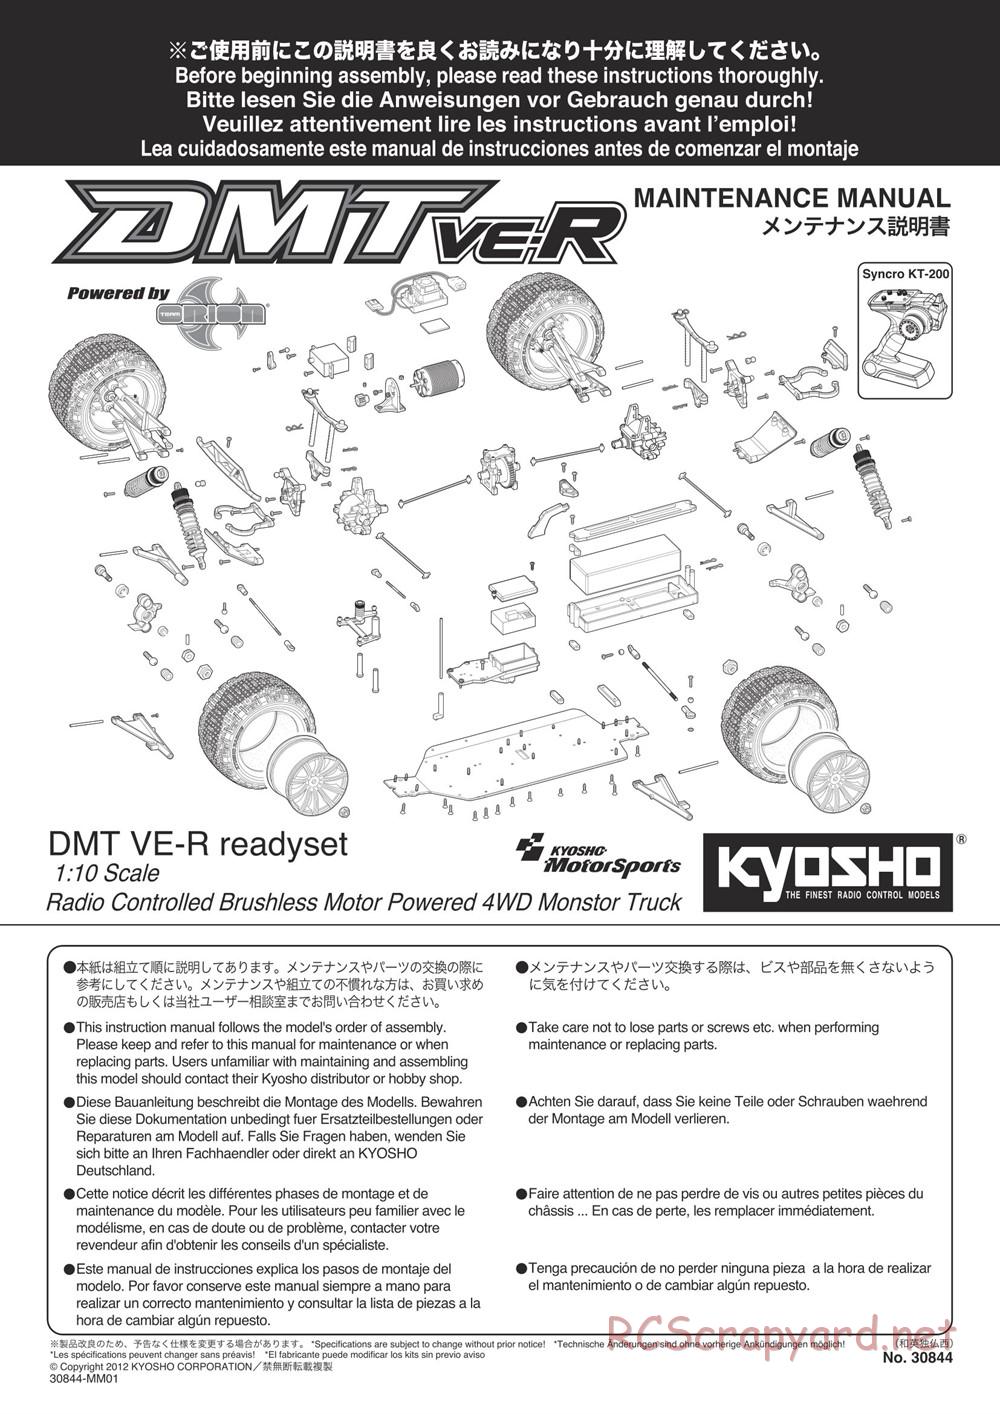 Kyosho - DMT VE-R - Manual - Page 1